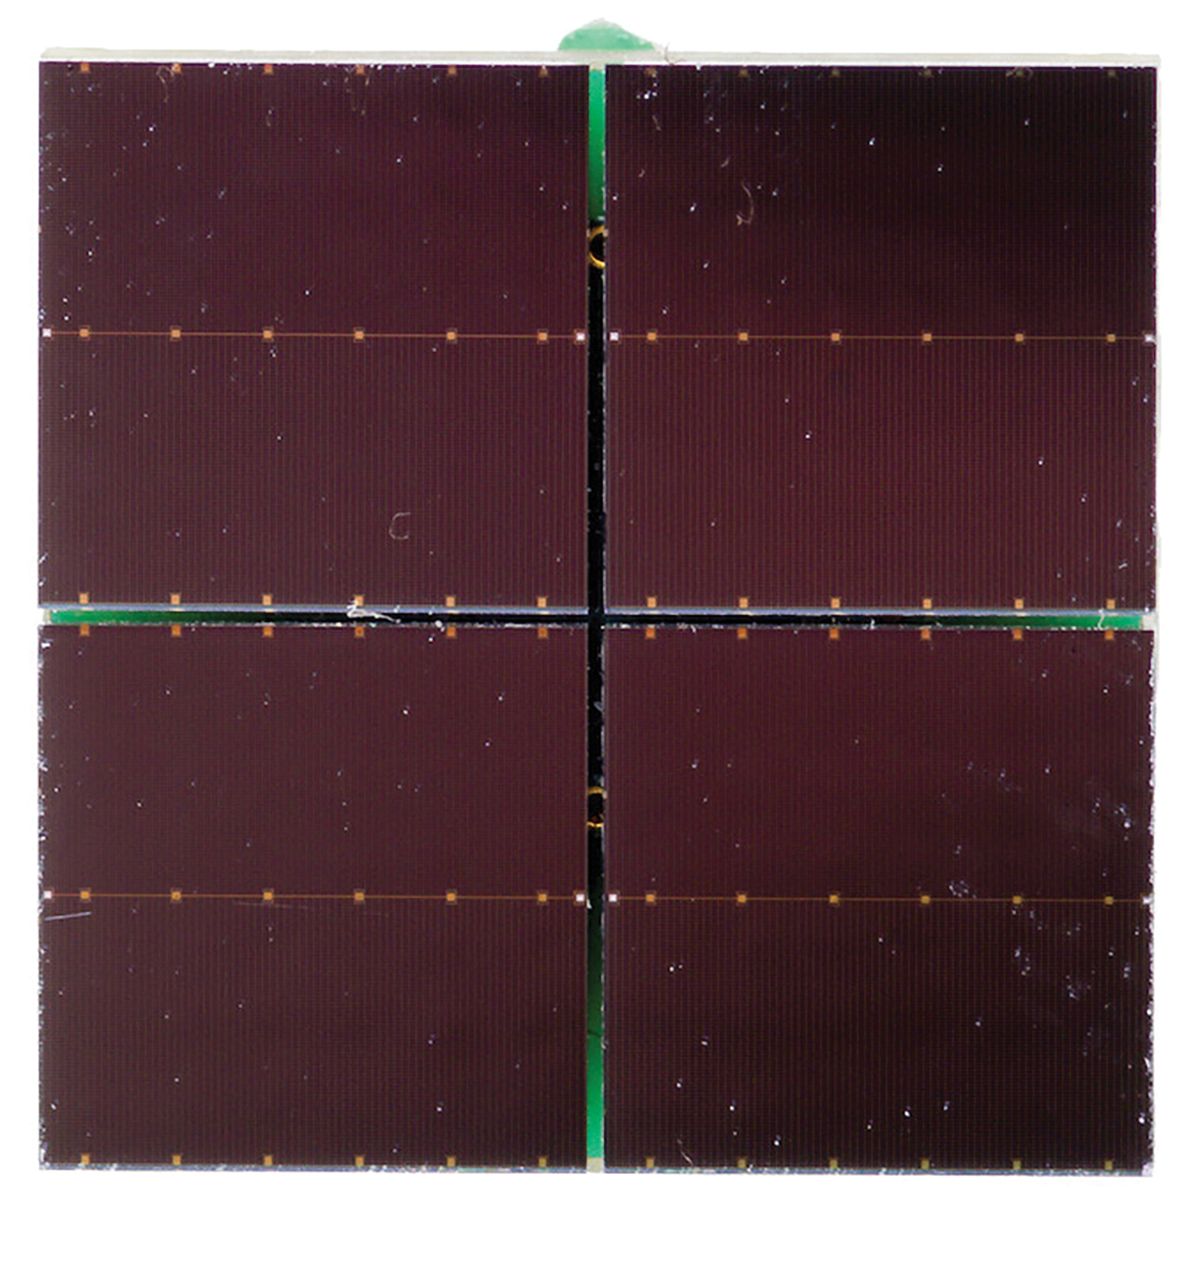 onsemi, ARRAYJ-60035-4P-PCB 1-Element Photomultiplier, Through Hole